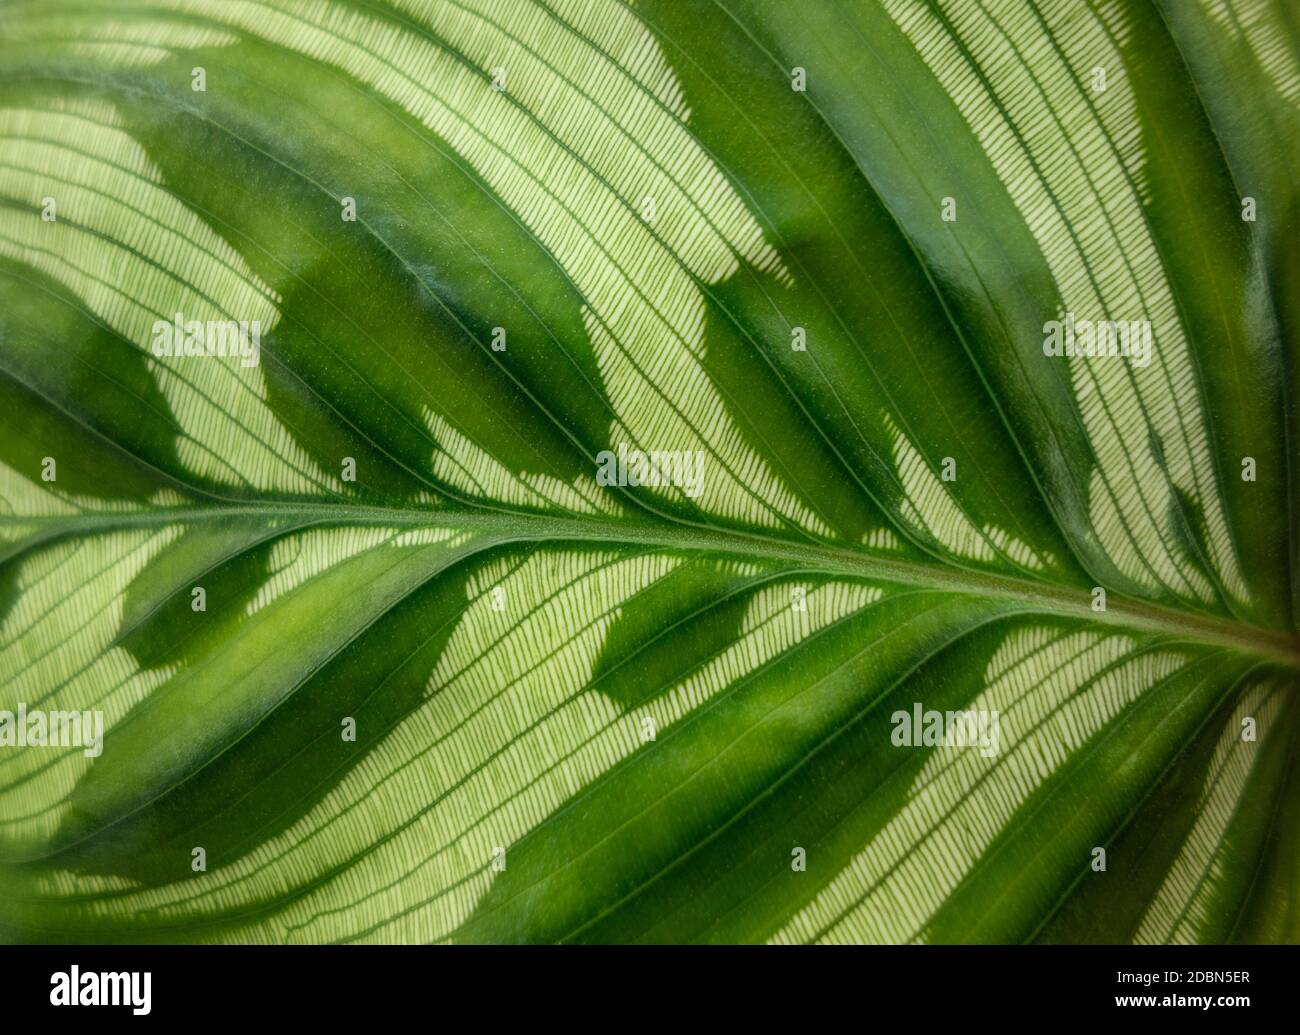 closeup shot showing a green striped Calathea makoyana leaf Stock Photo